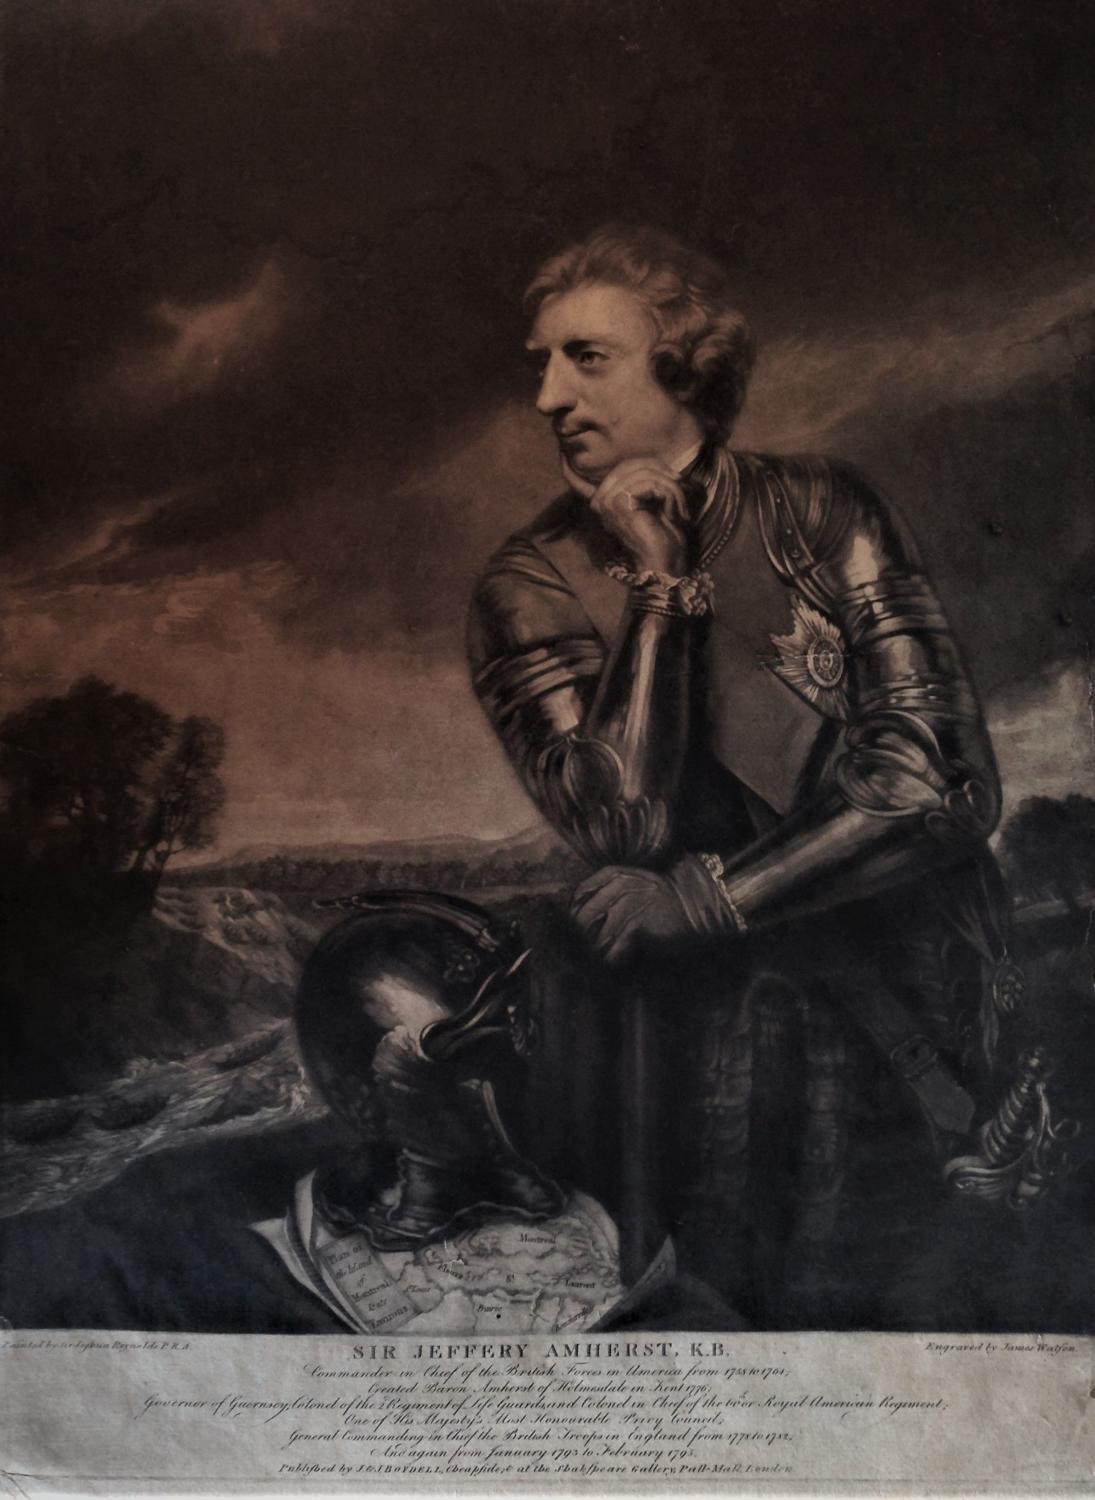 Sir Jeffrey Amherst, K.B. (1717-1797)